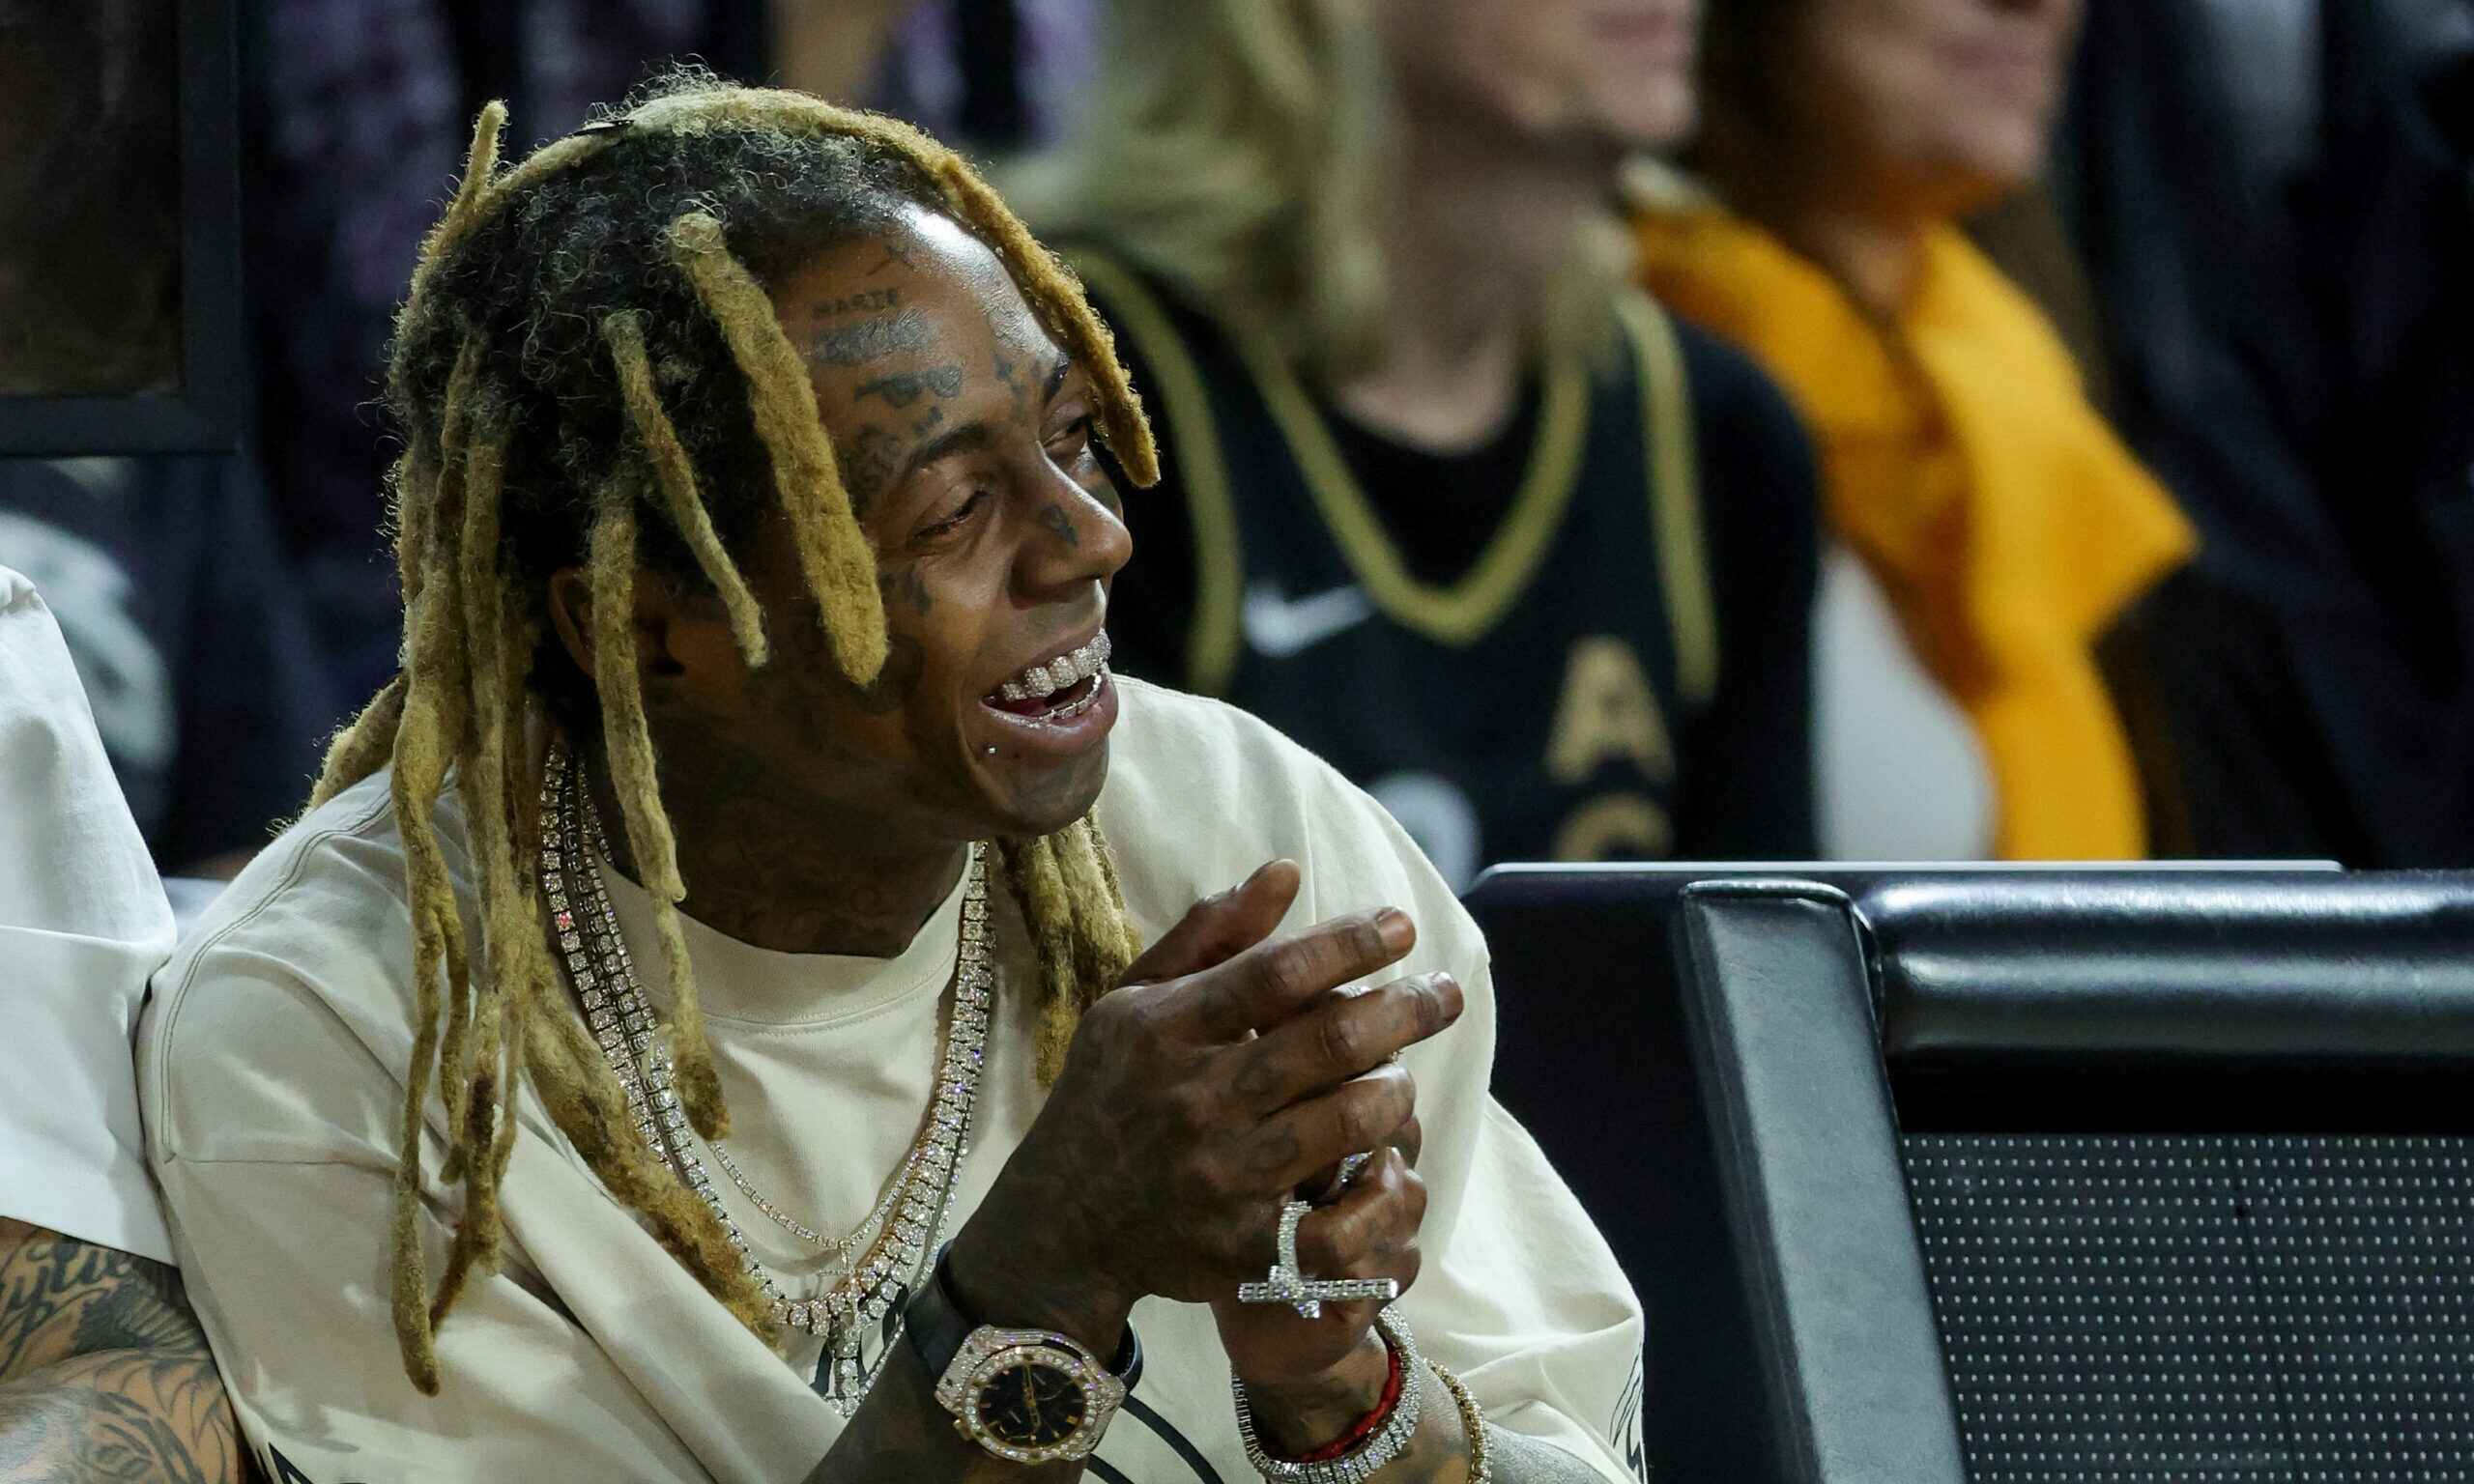 Lil Wayne Expresses Displeasure With Inaccurate Wax Figure